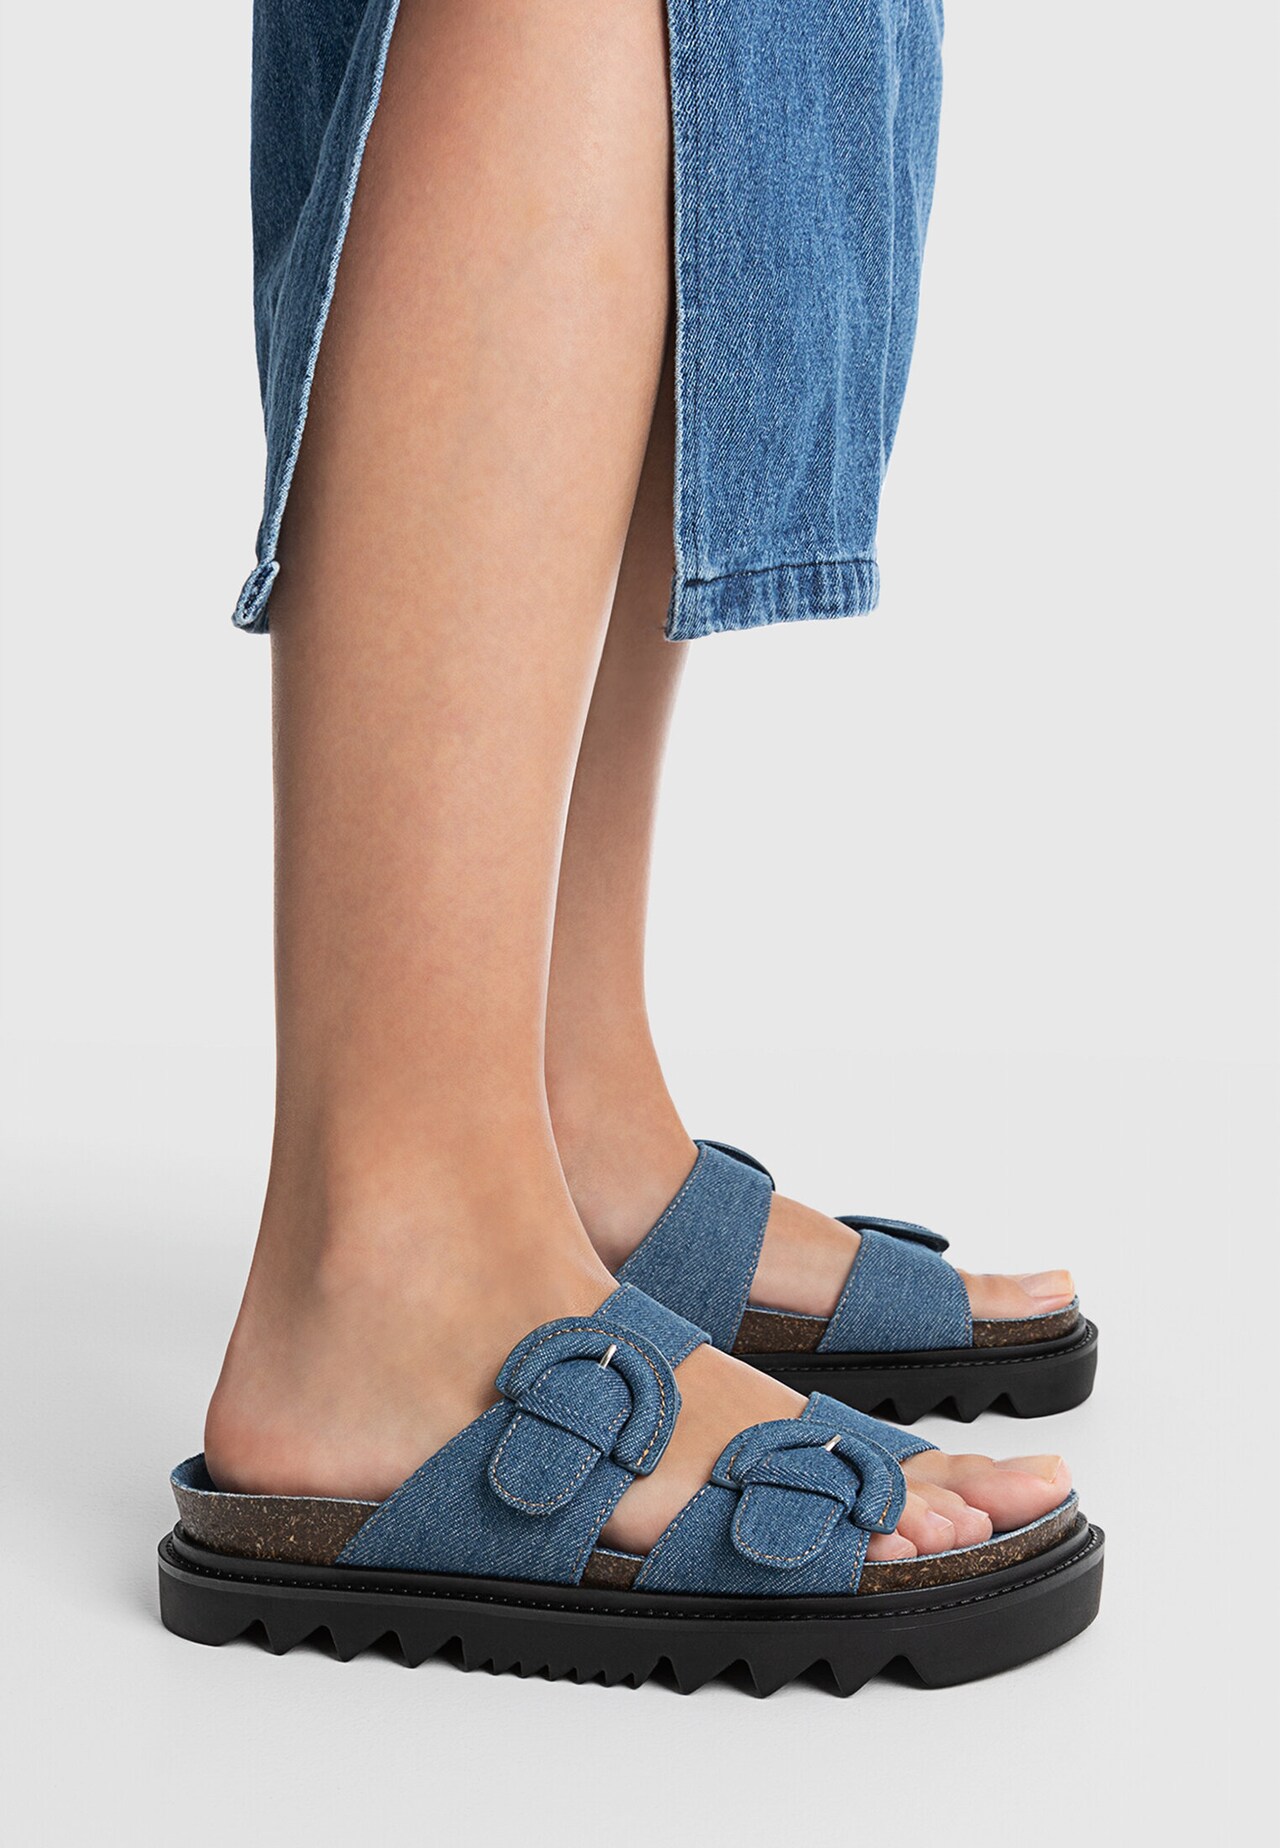 Buckled flat denim sandals - Women's fashion